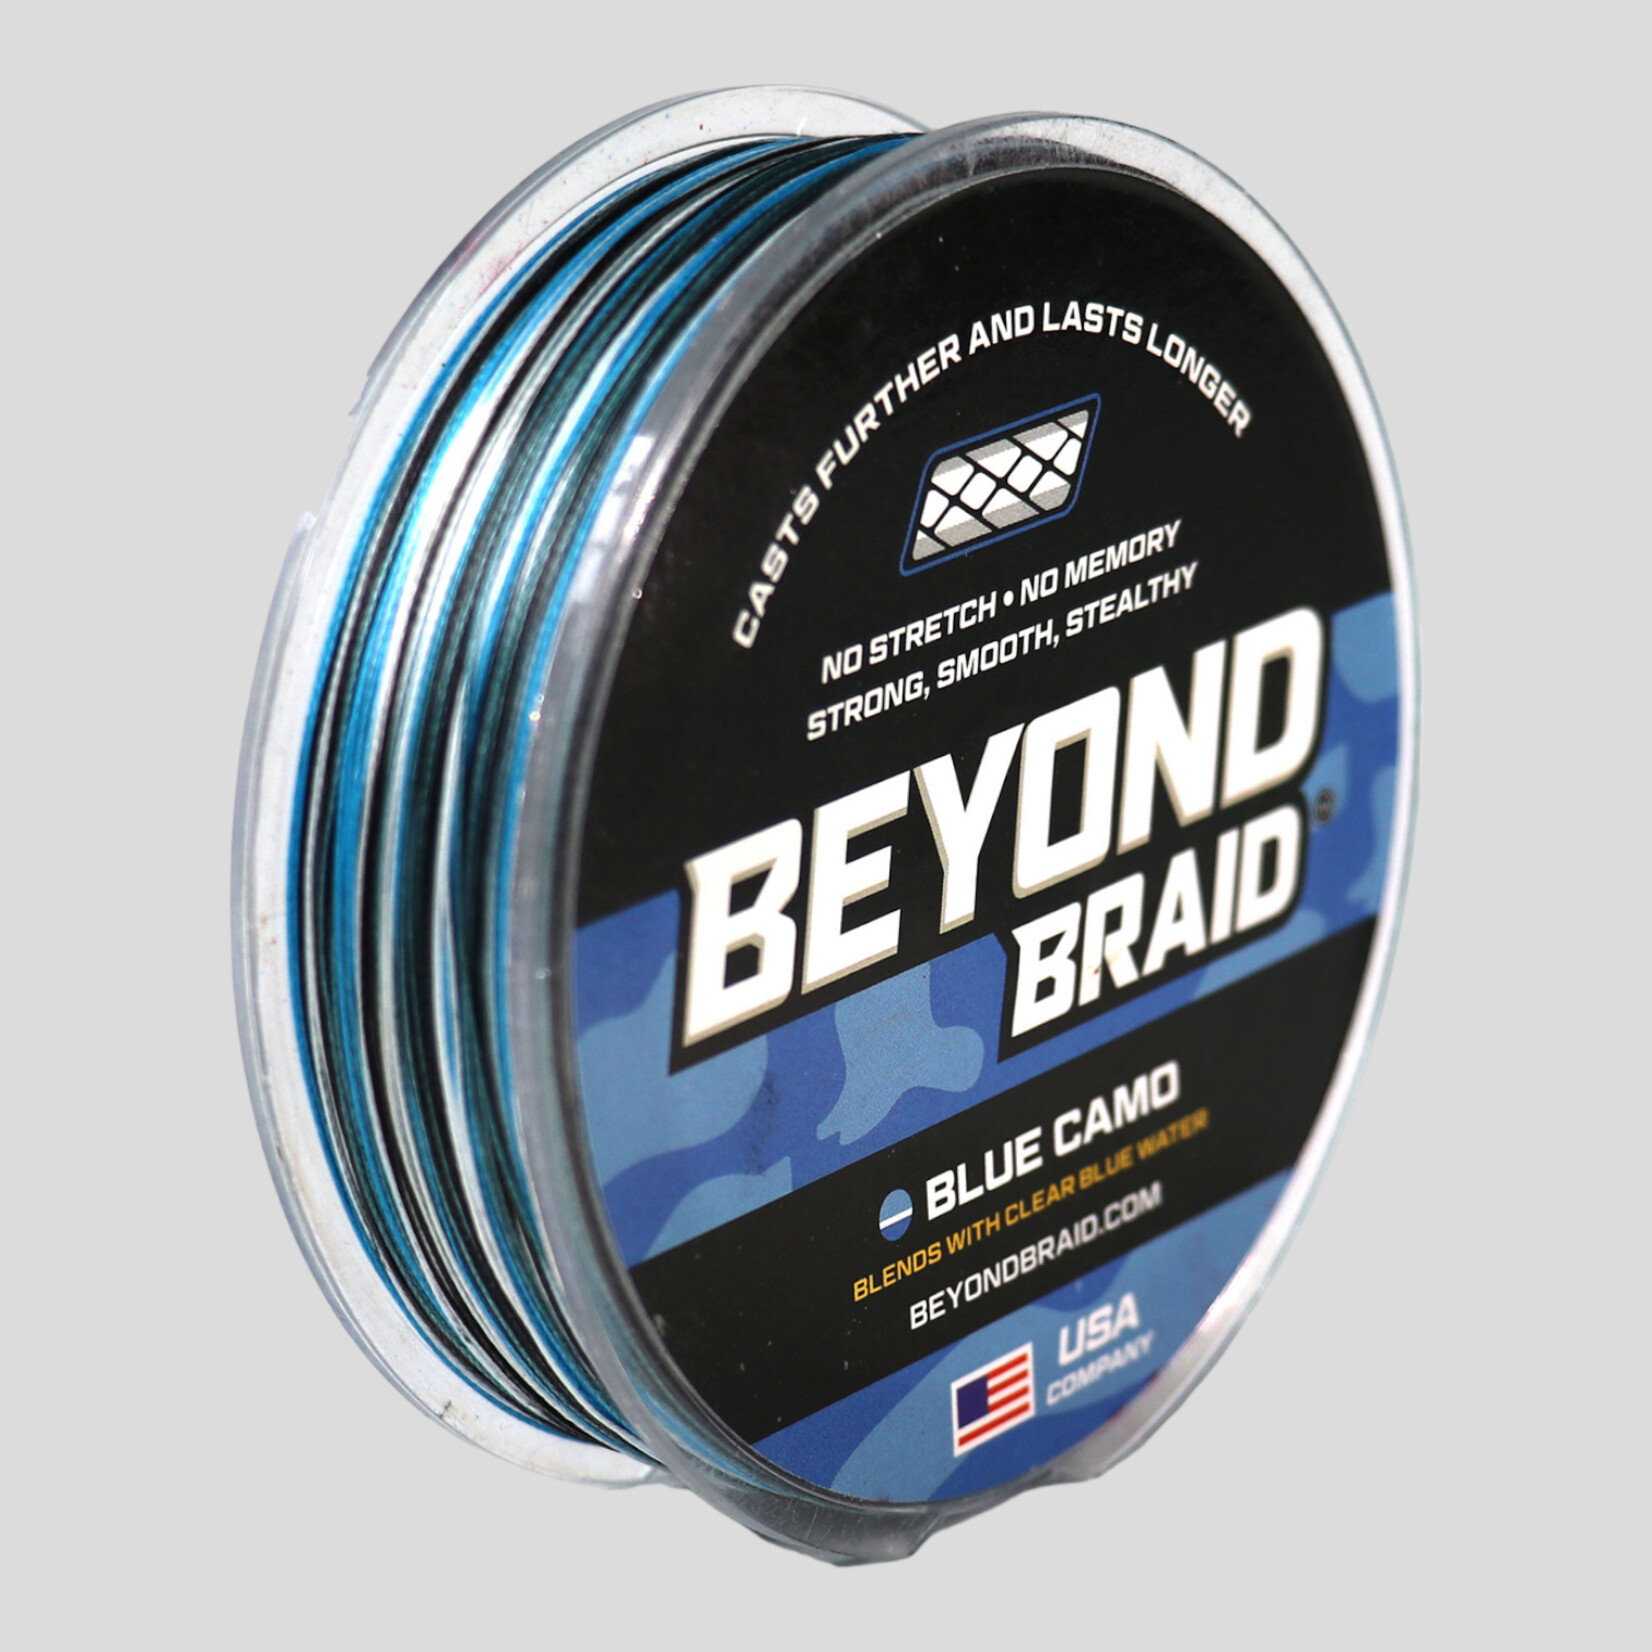 Beyond Braid Beyond Braid 8X 300yds